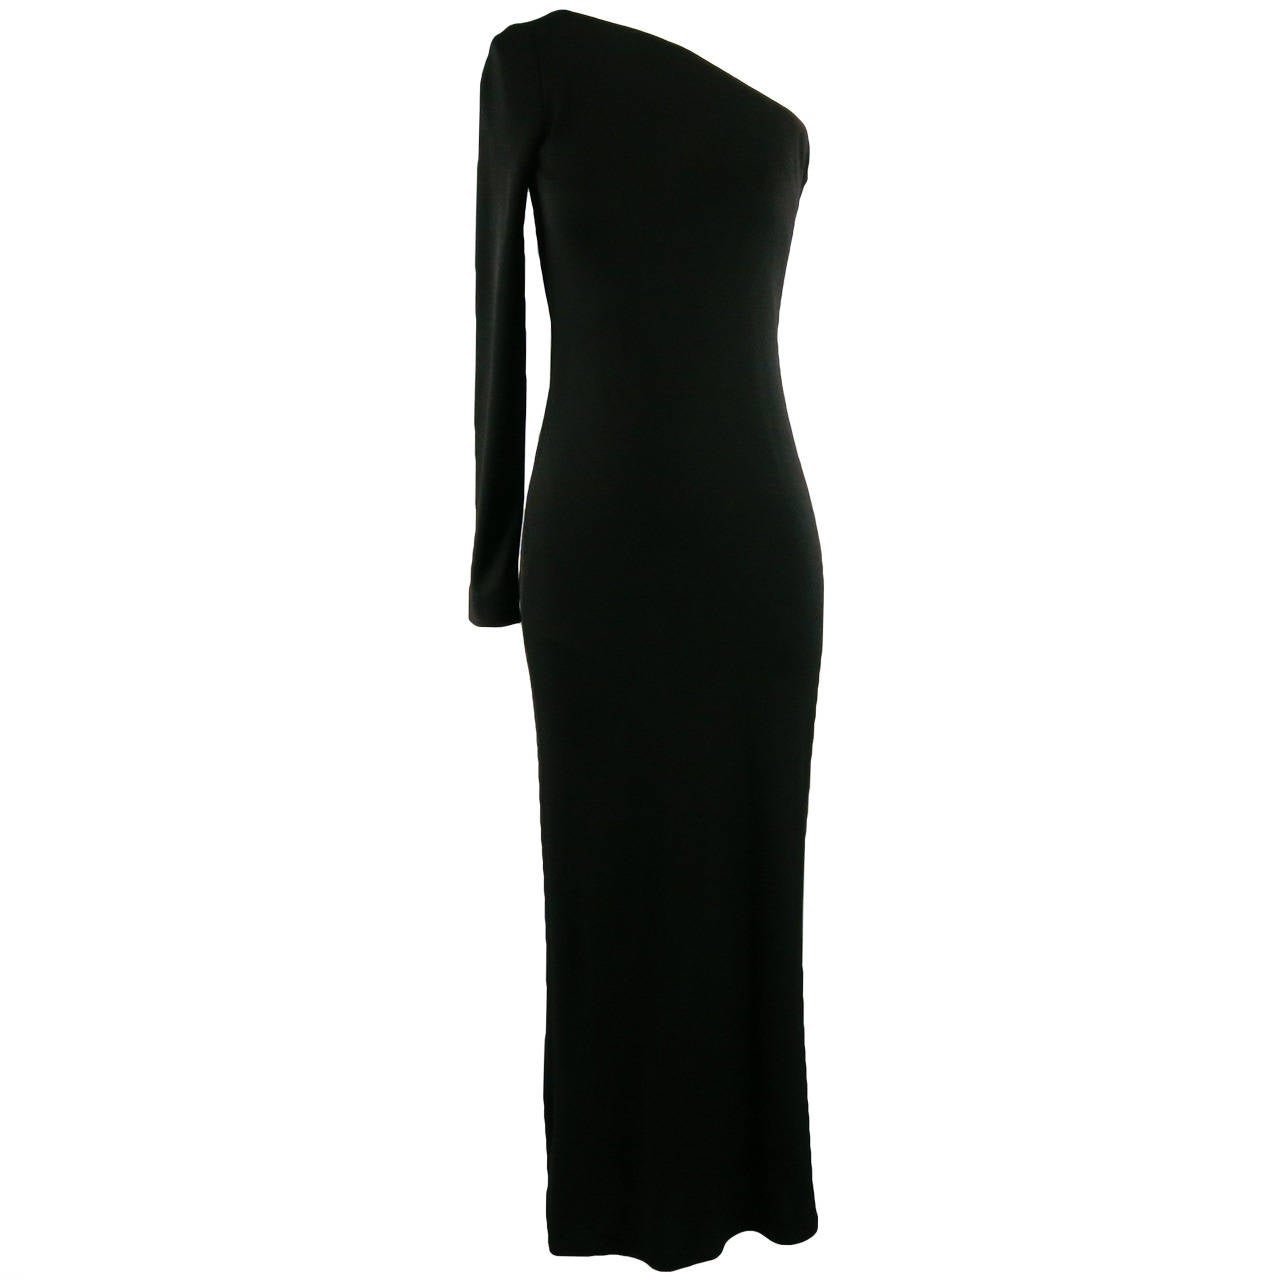 RALPH LAUREN COLLECTION Size 2 Black Viscose One Shoulder Gown/Evening Wear